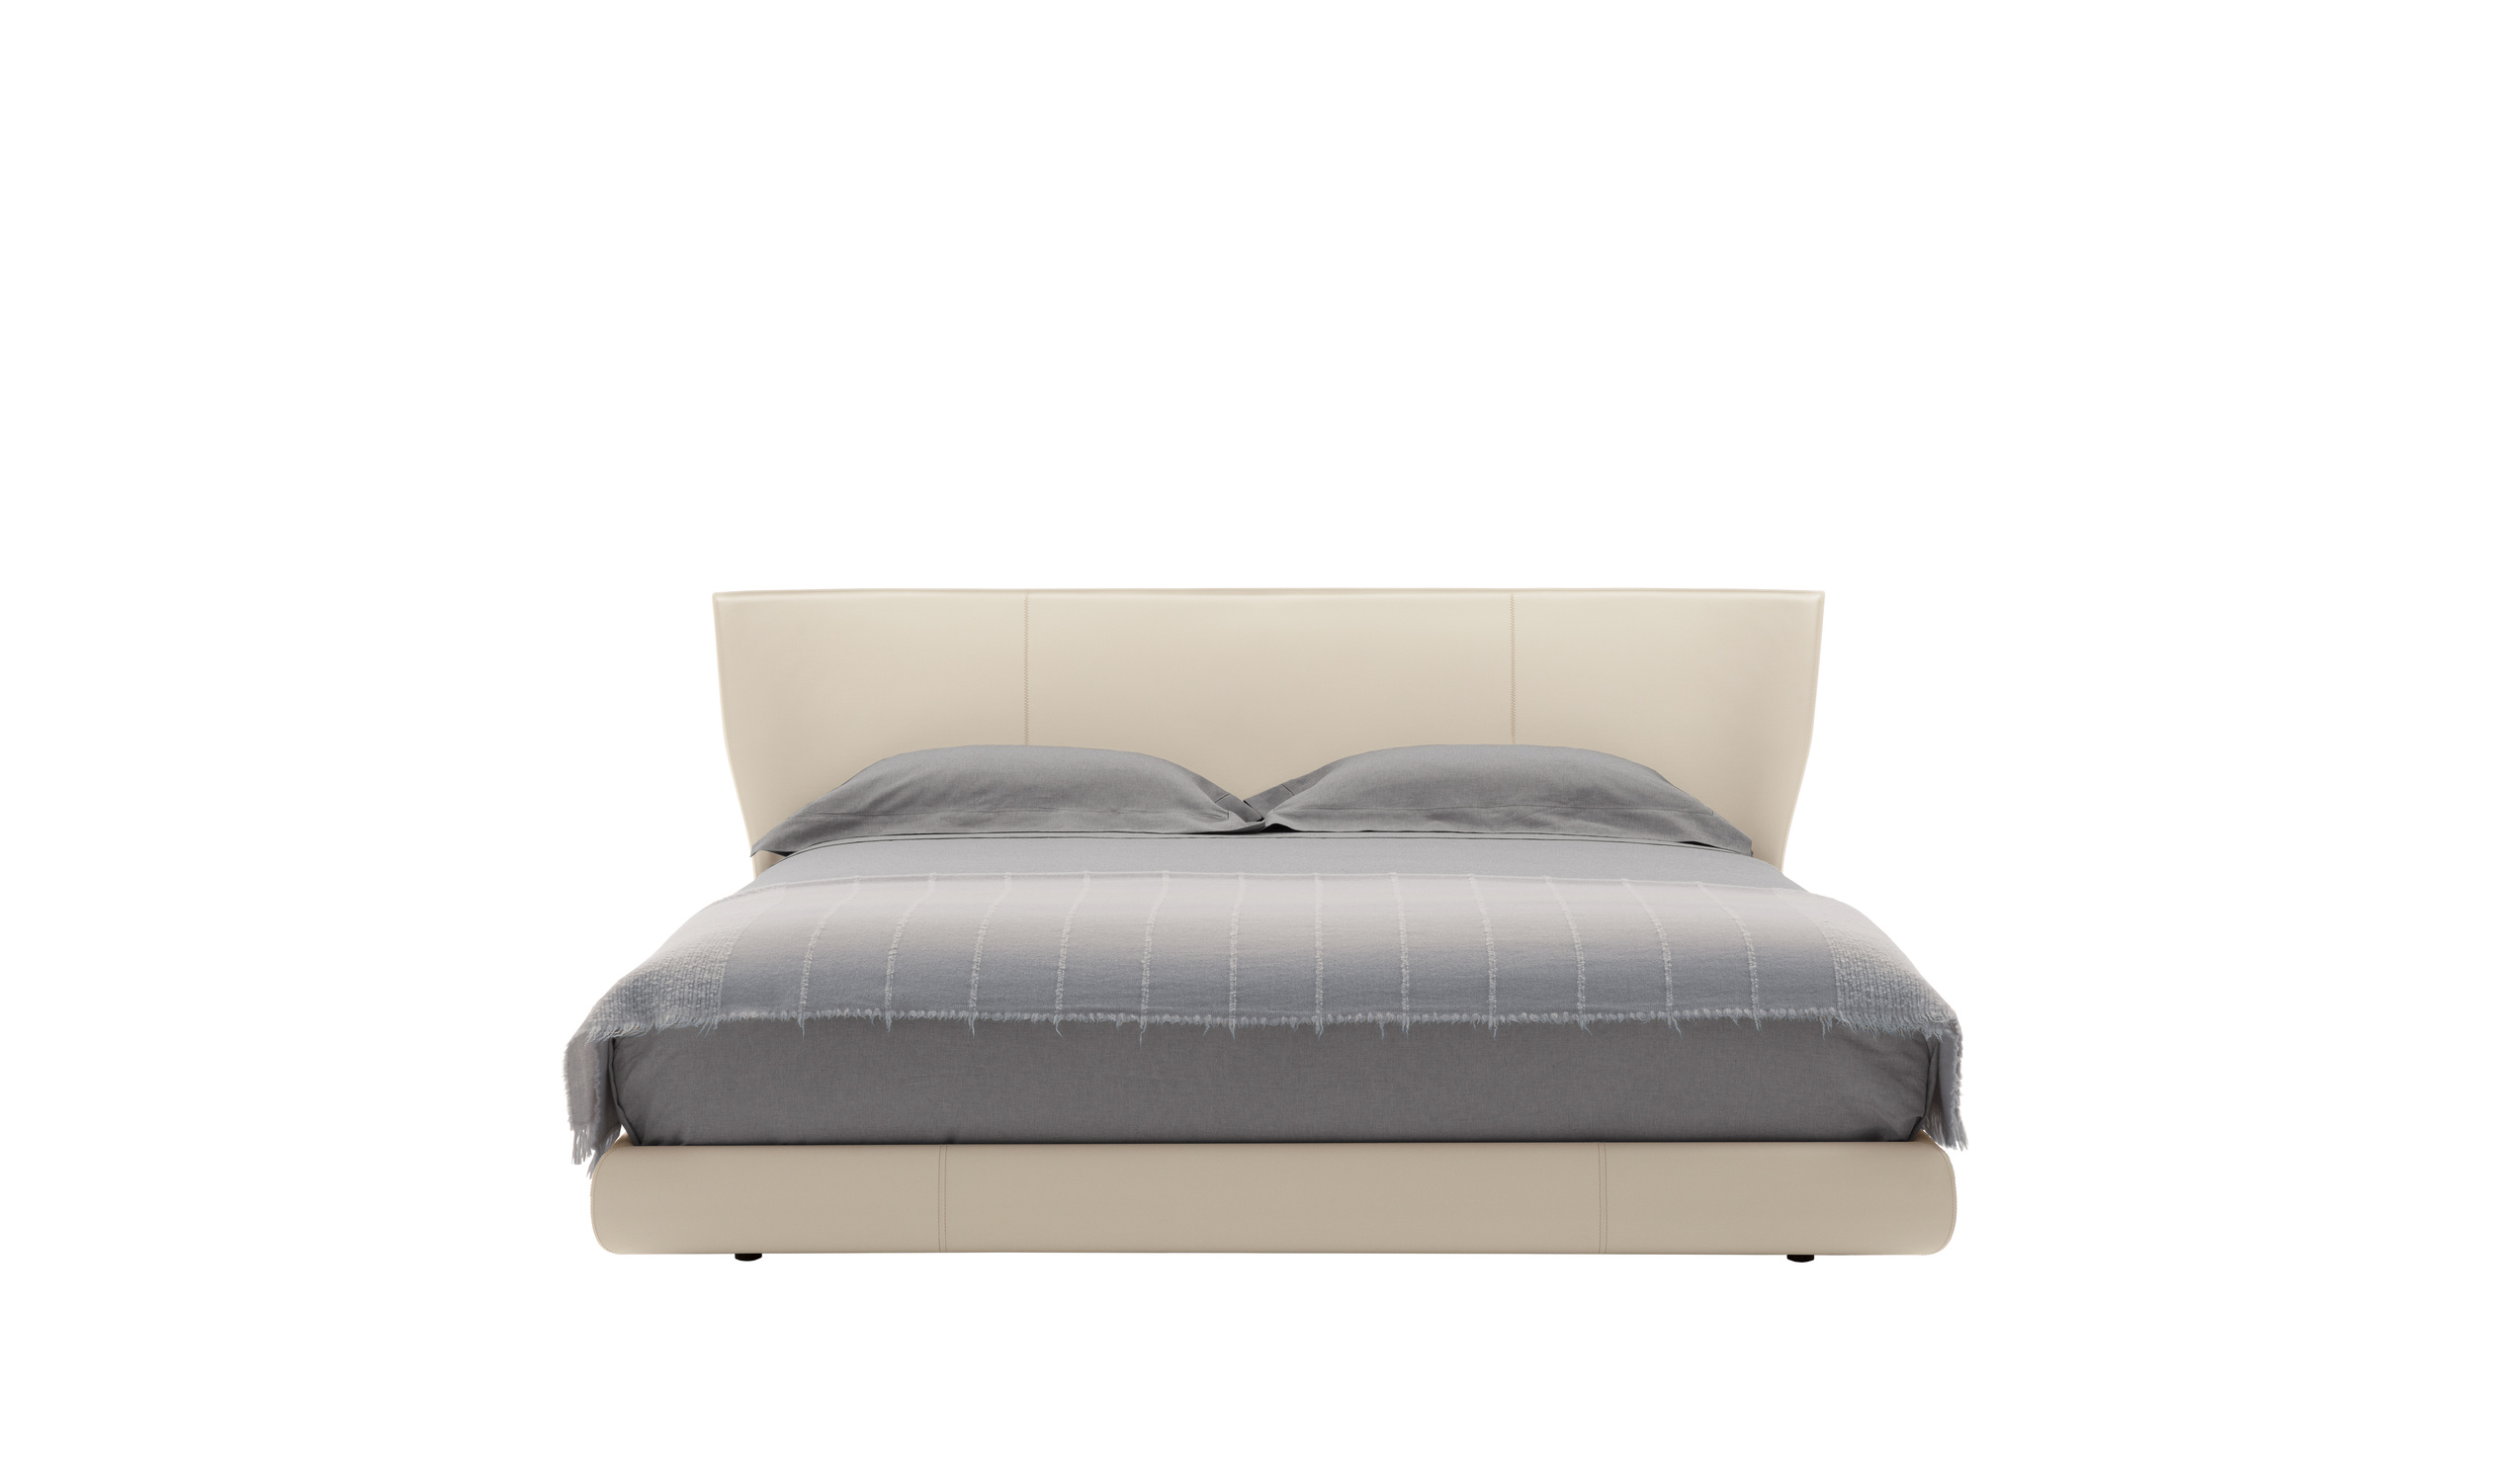 Designer Italian modern beds - Alys 10 Beds